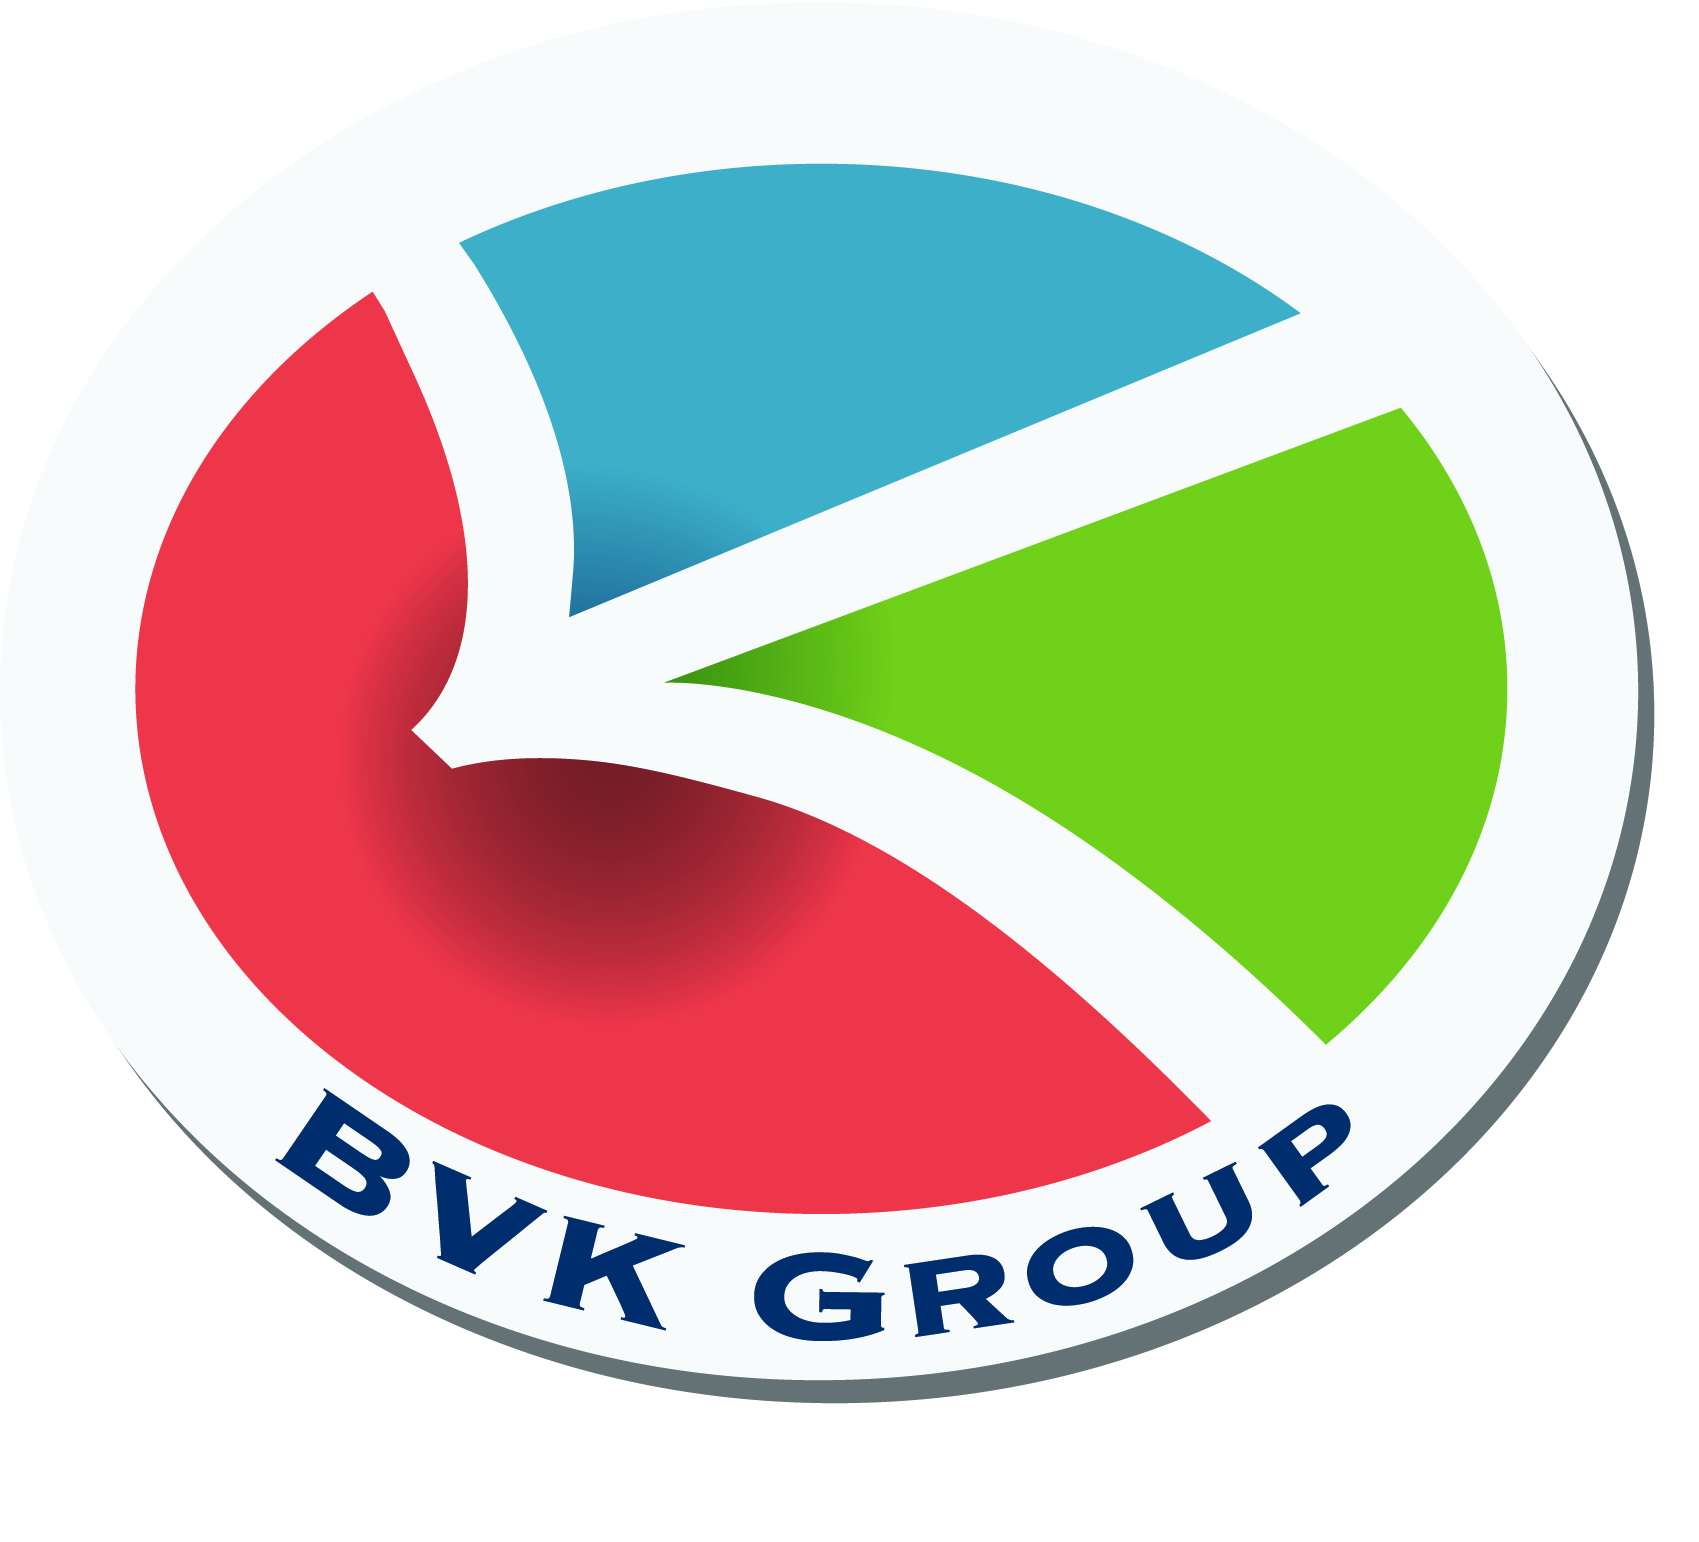 BVK logo